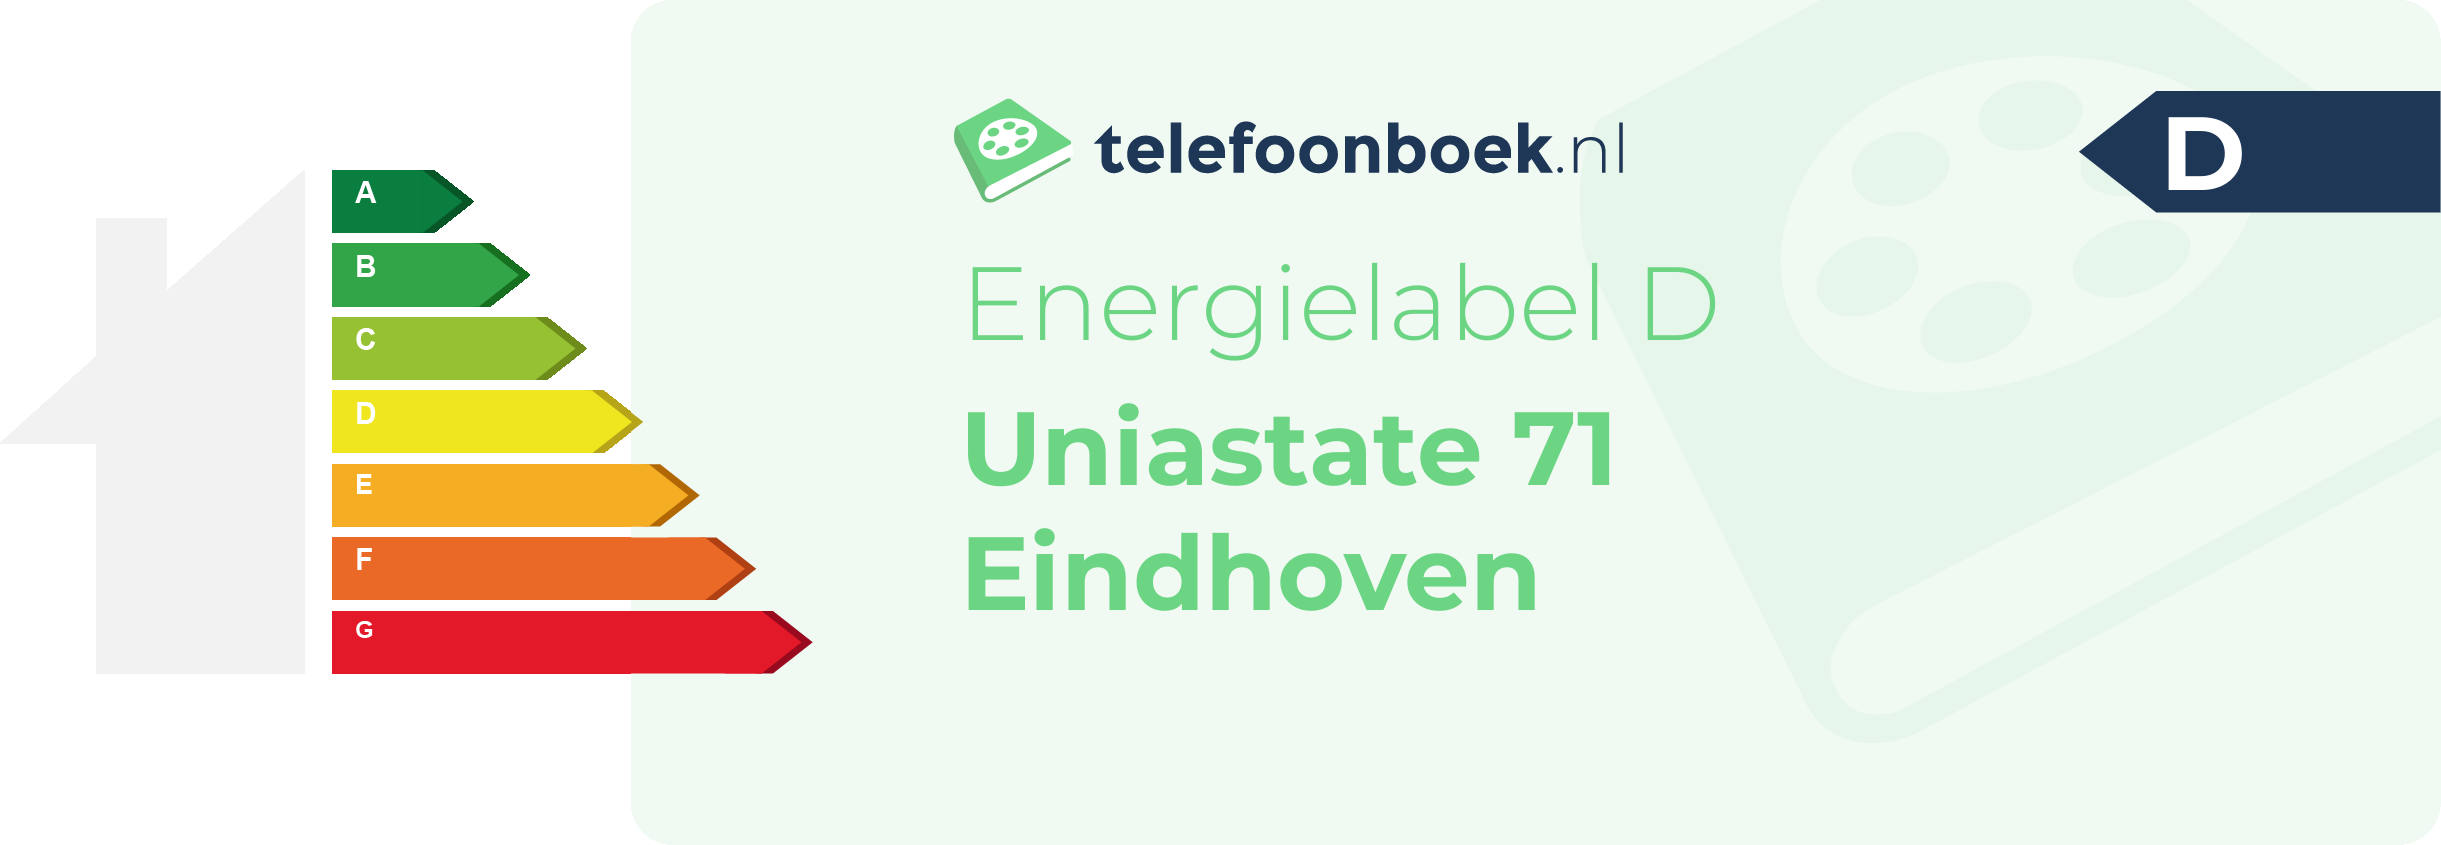 Energielabel Uniastate 71 Eindhoven